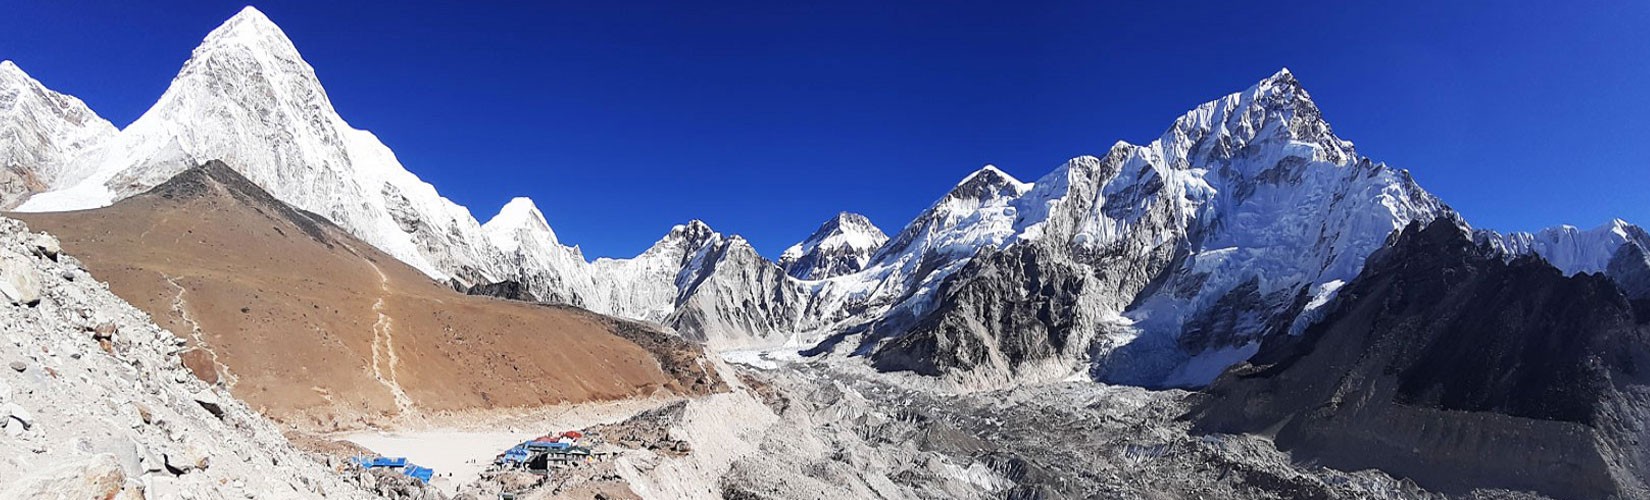 Everest Base Camp trek in March